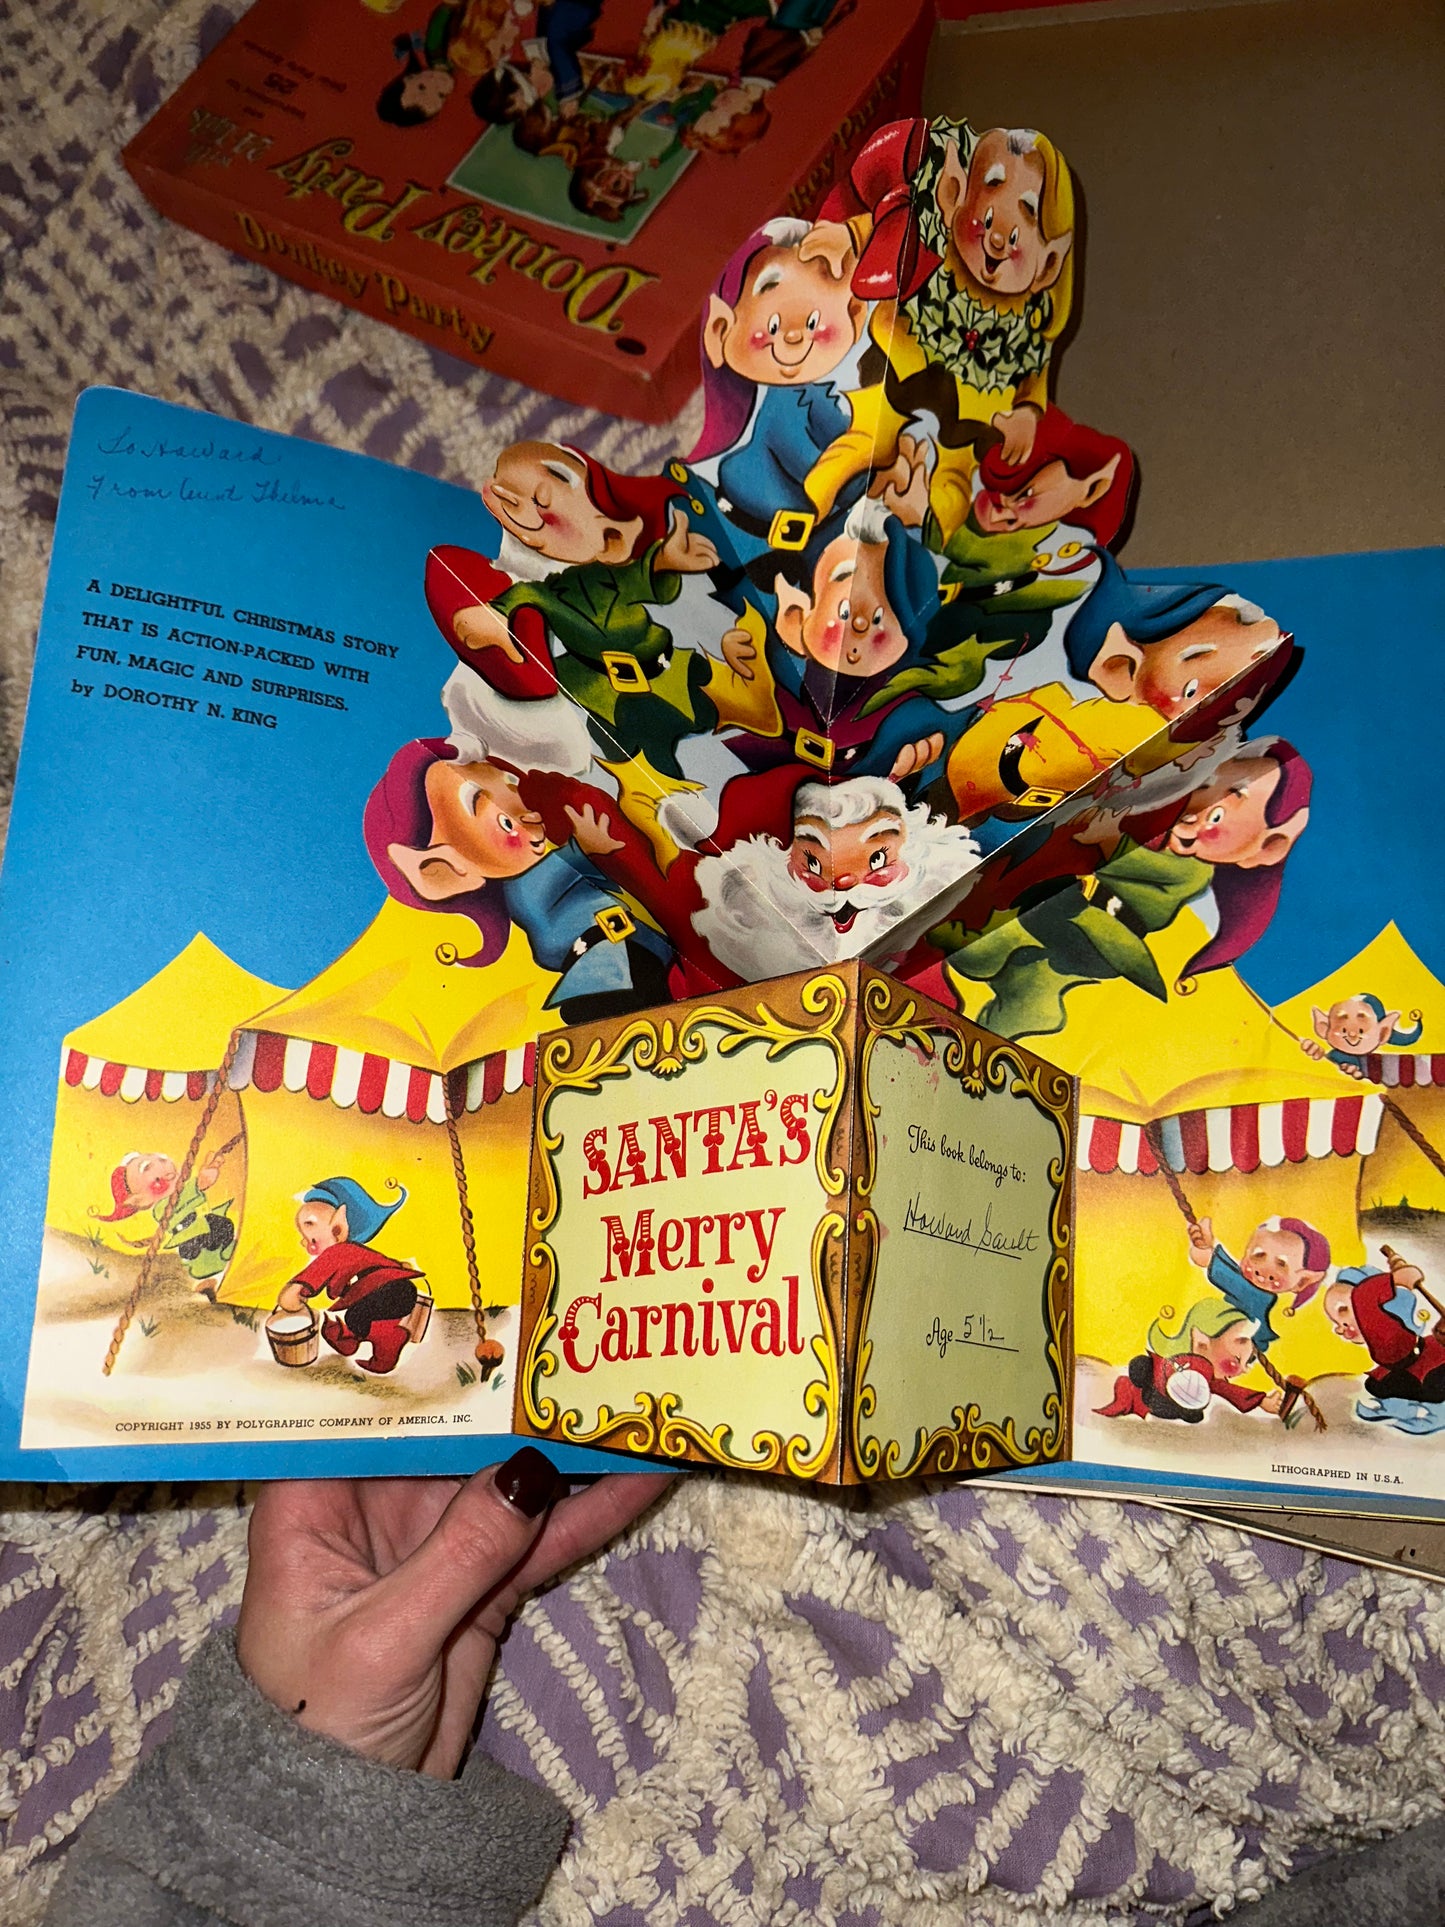 Vintage 1955 Santa’s Merry Carnival by Dorothy N. King Paperback Pop-Up Book w/ Original Box